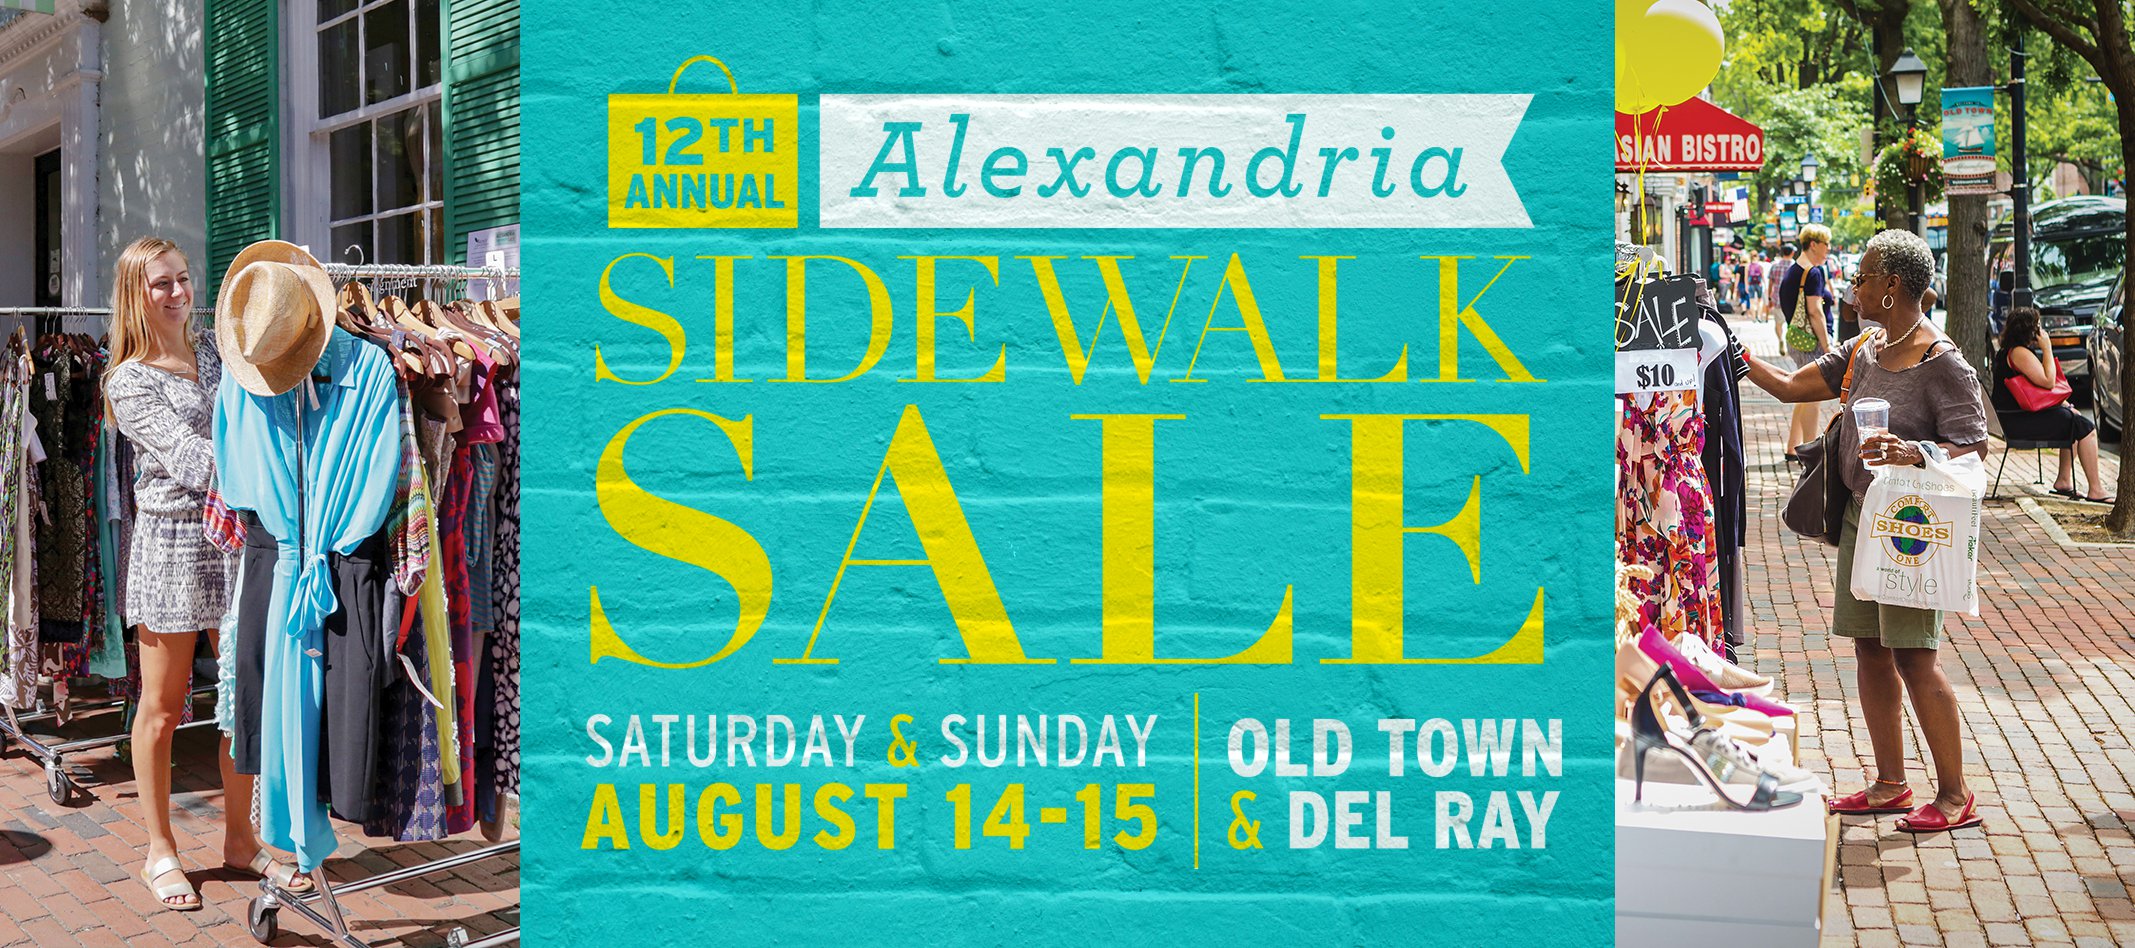 Alexandria S Annual Summer Sidewalk Sale Dates Announced Alexandria Living Magazine